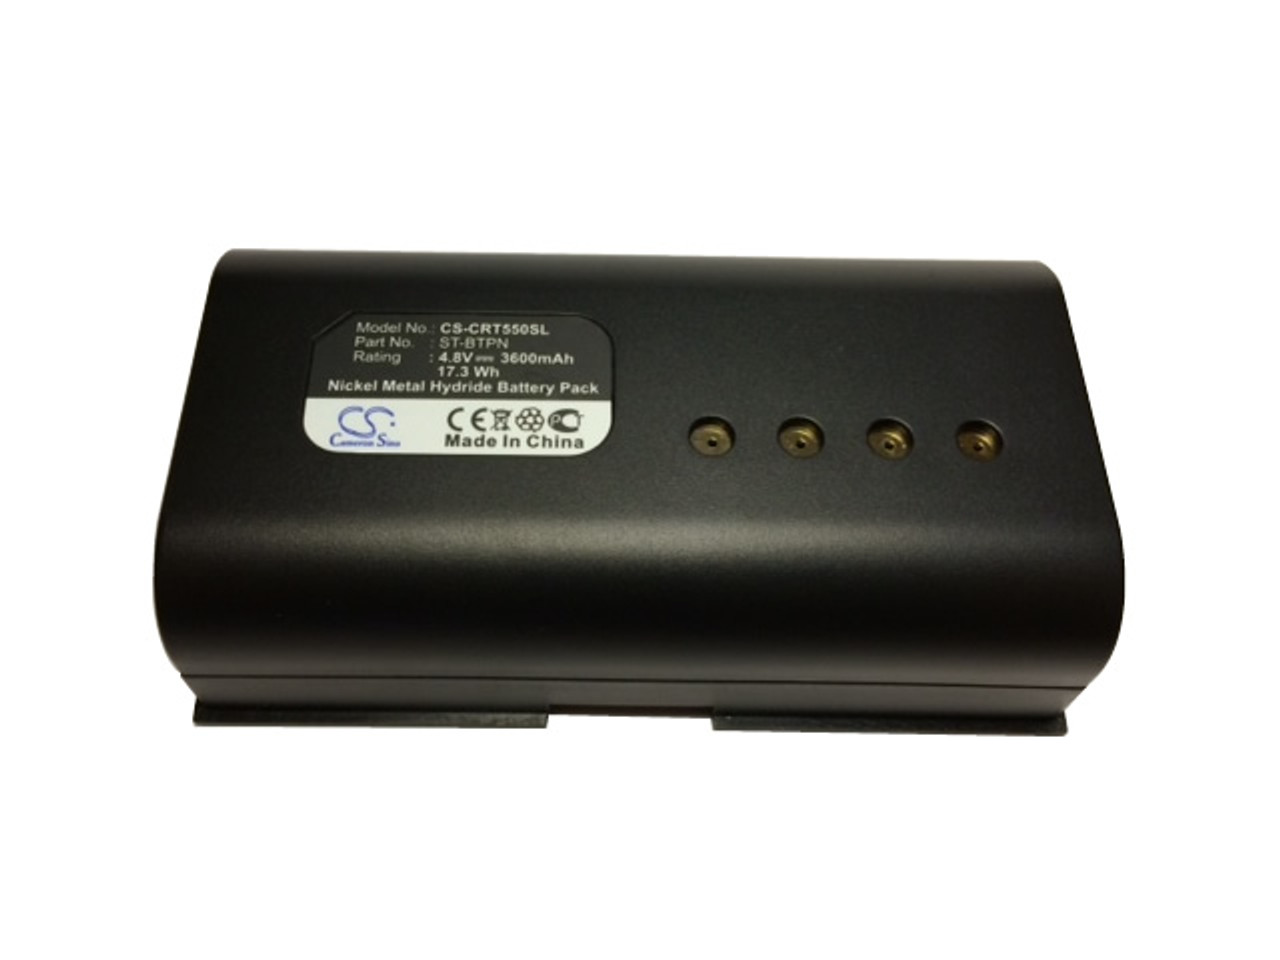 Crestron ST-1500 Remote Control Battery